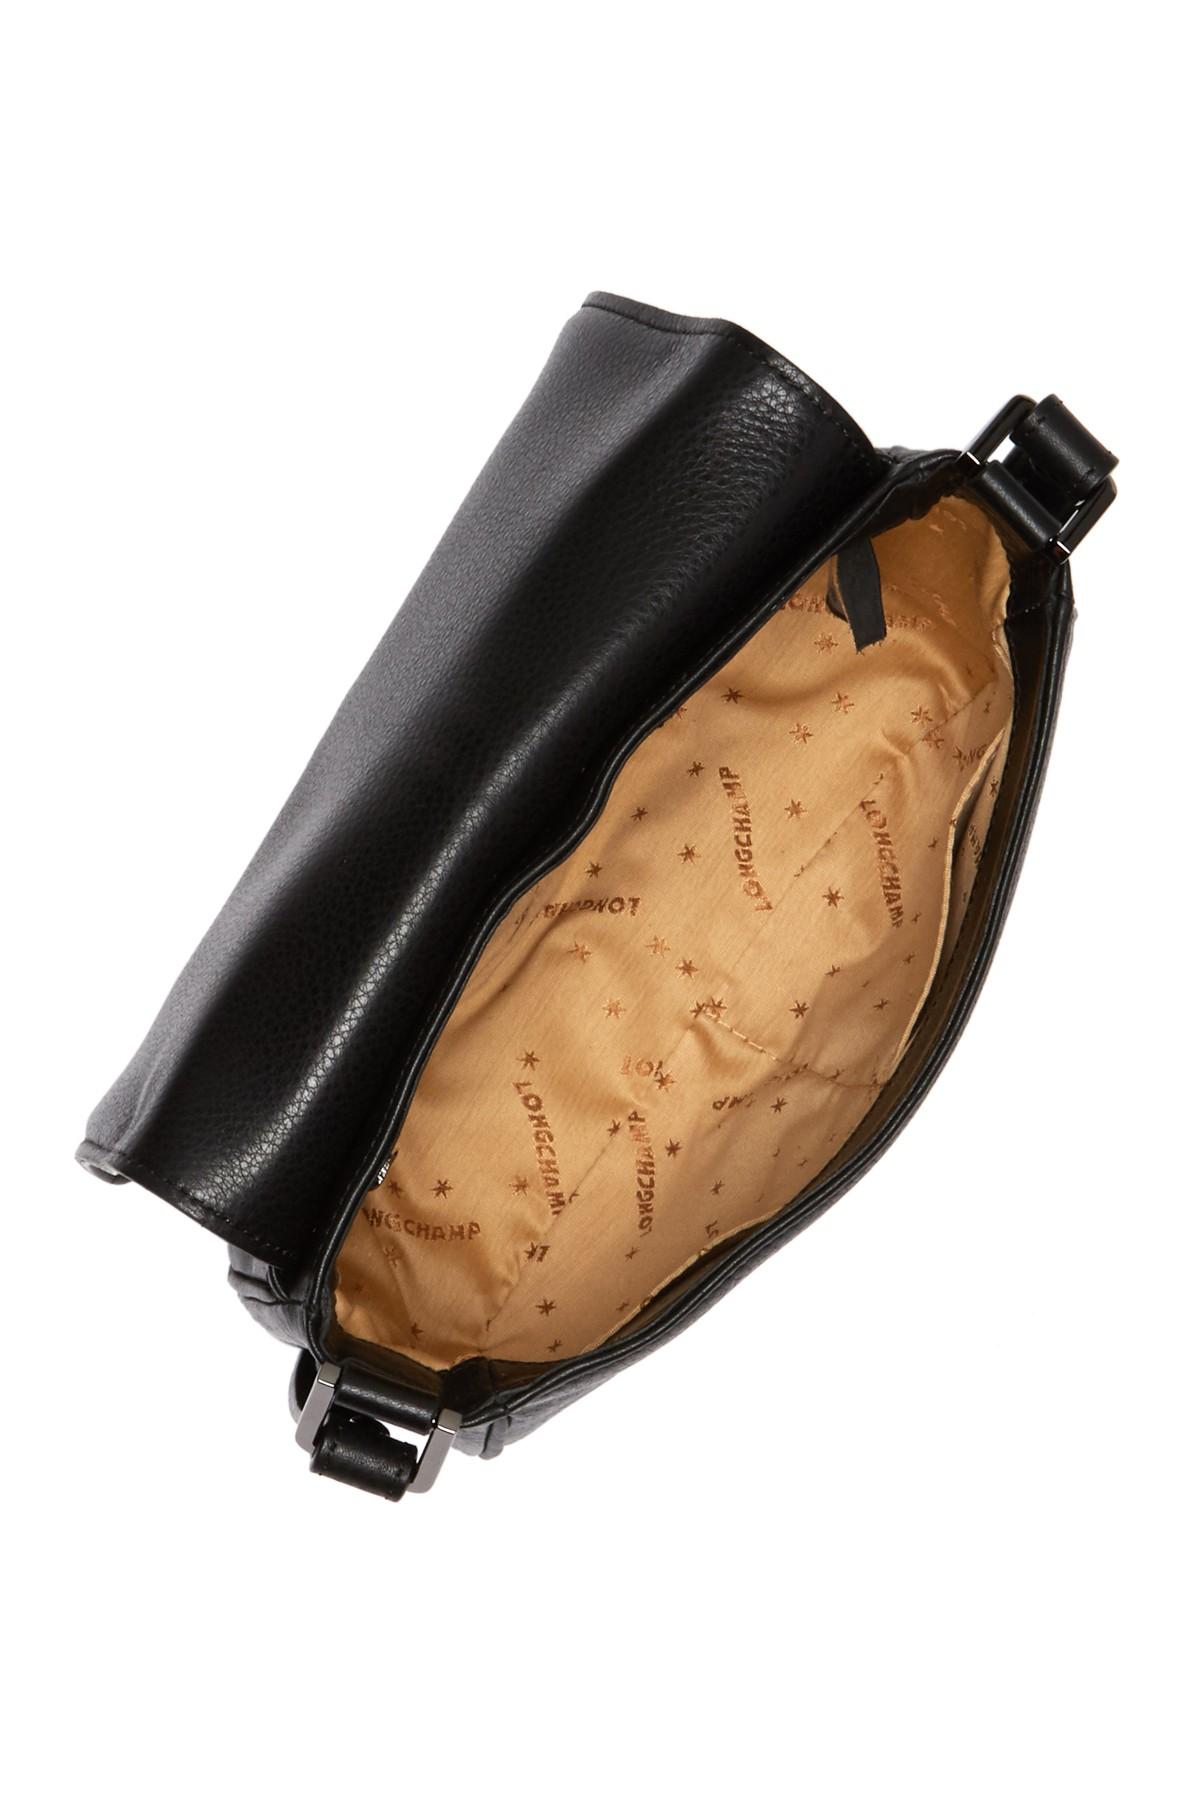 Longchamp Mystery Small Leather Crossbody Bag in Black - Lyst